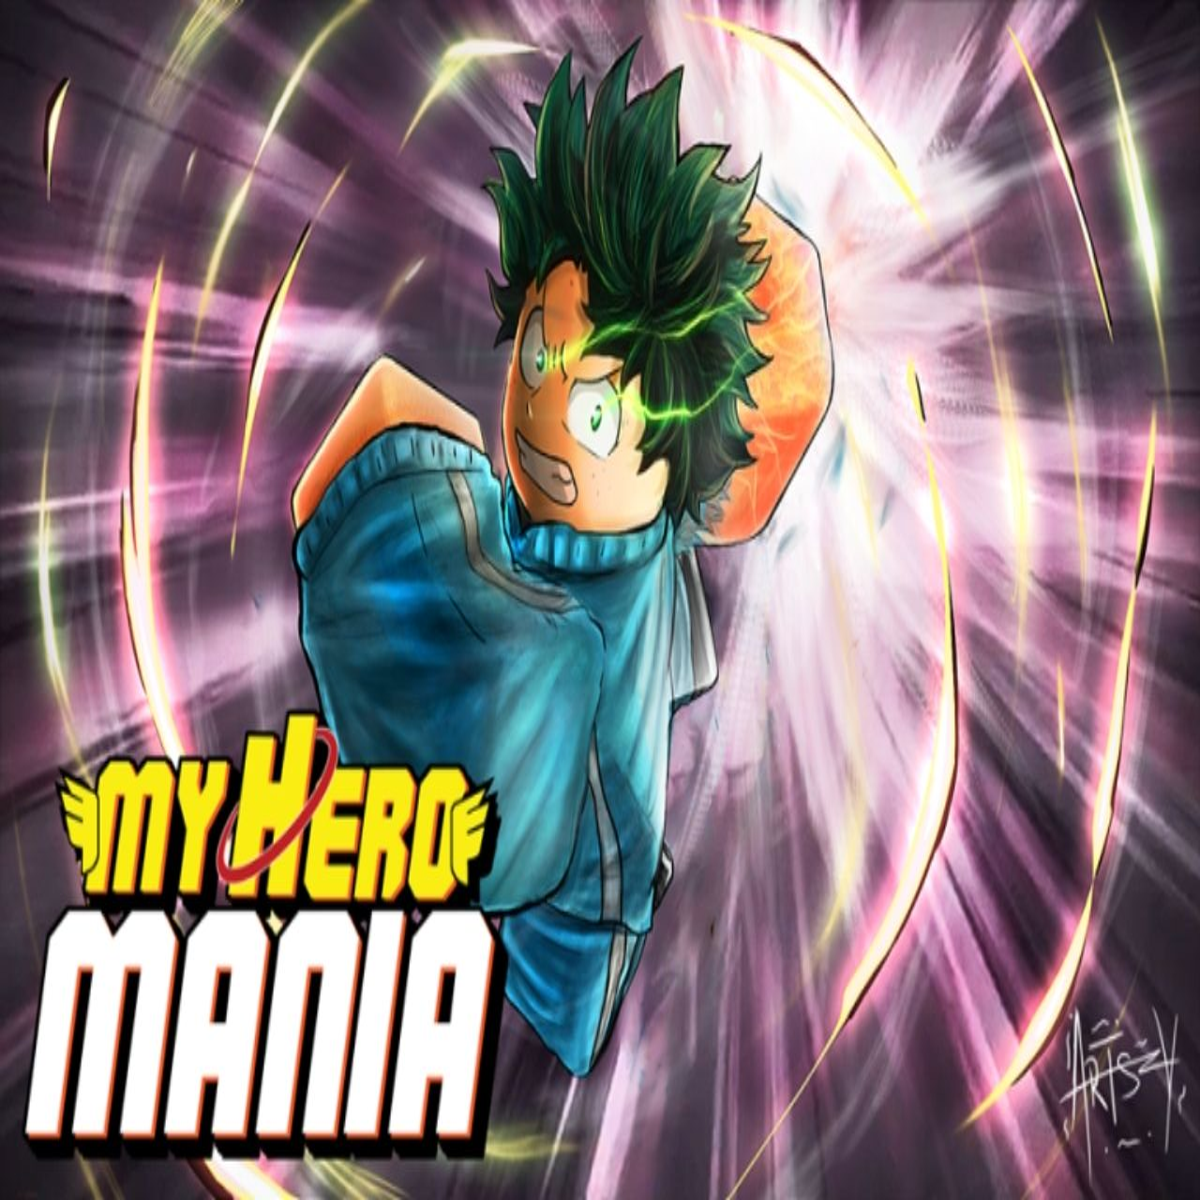 Roblox My Hero Mania Codes (April 2023)